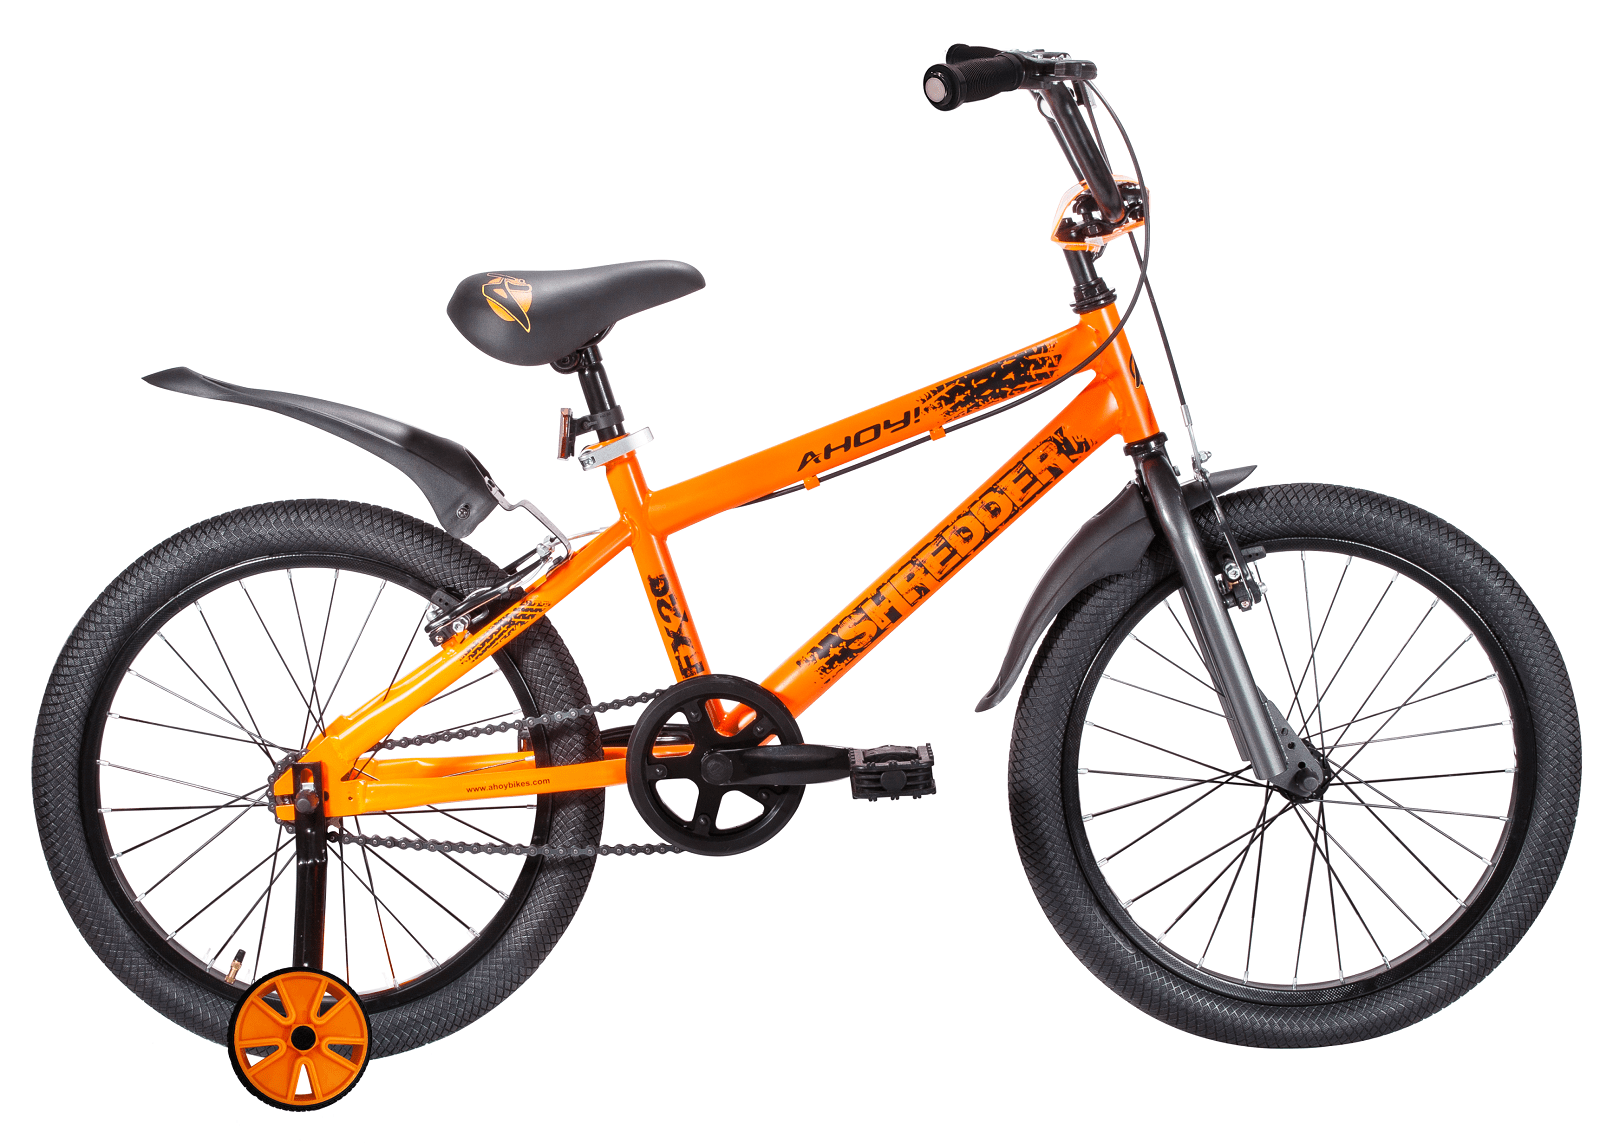 Shredder Kids Bike 16T Single Speed | Buy Orange Cycle Non Gear for Kids